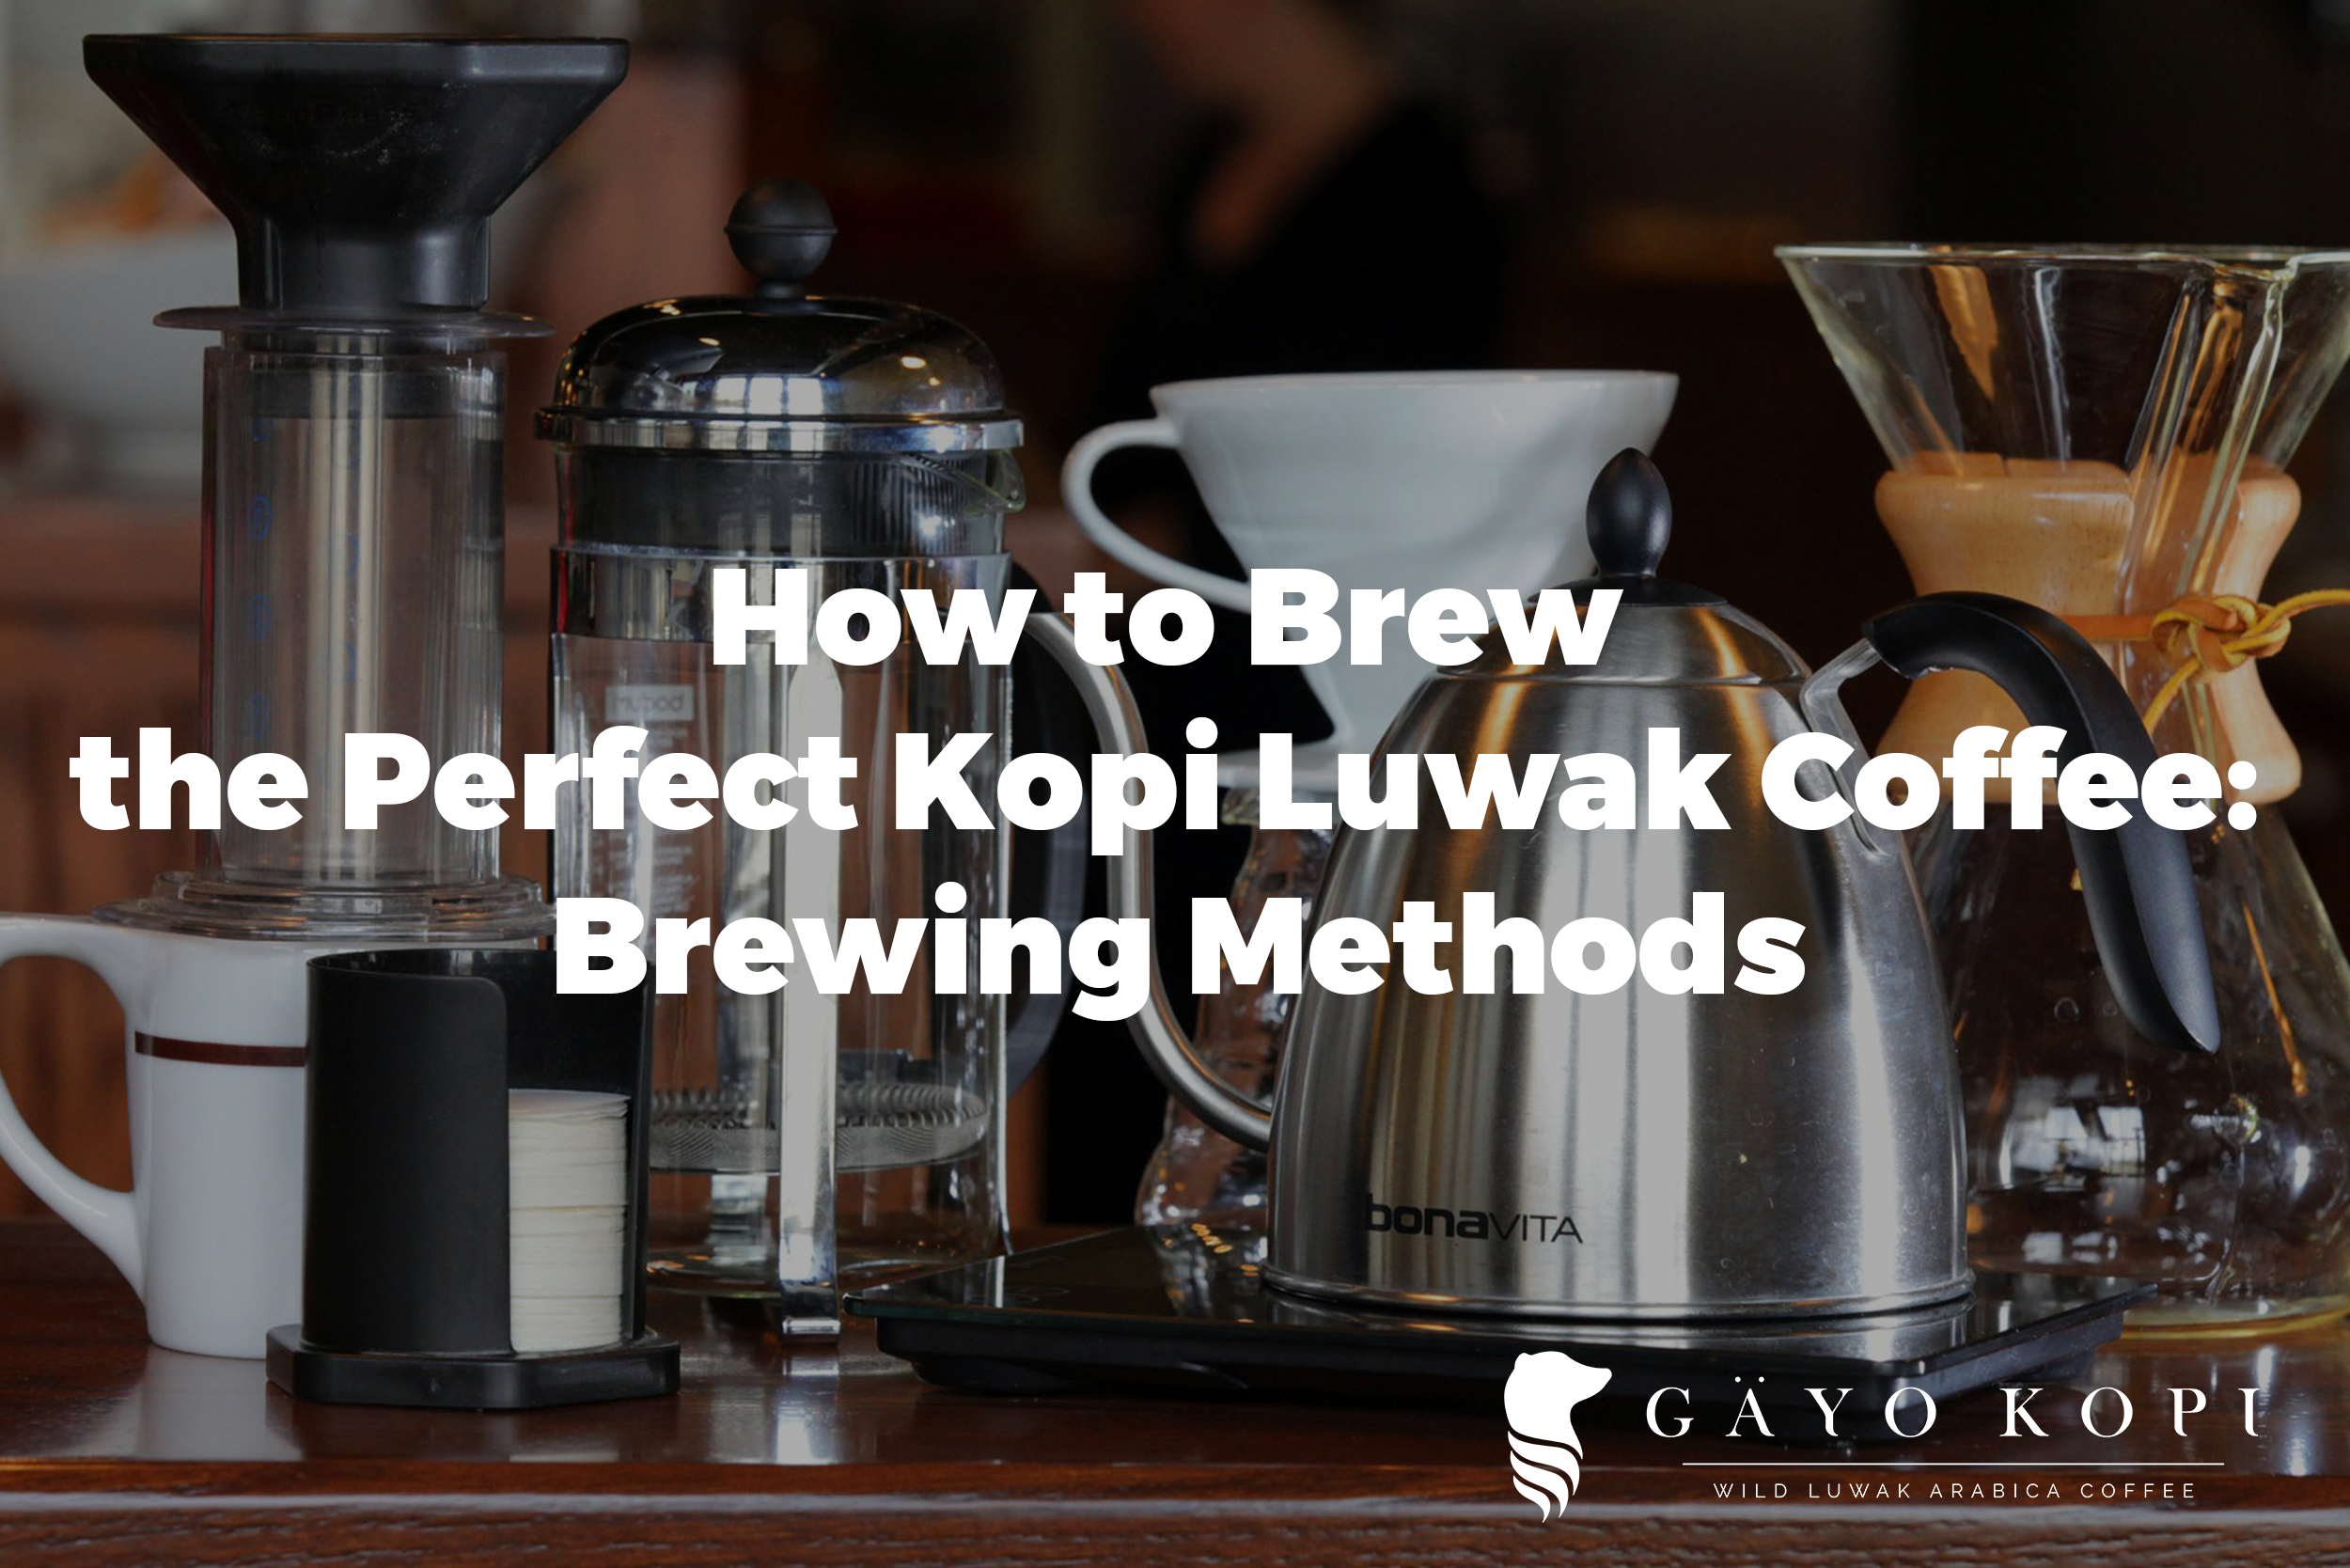 https://gayokopi.com/wp-content/uploads/2016/08/kopi-luwak-brewing-methods.png